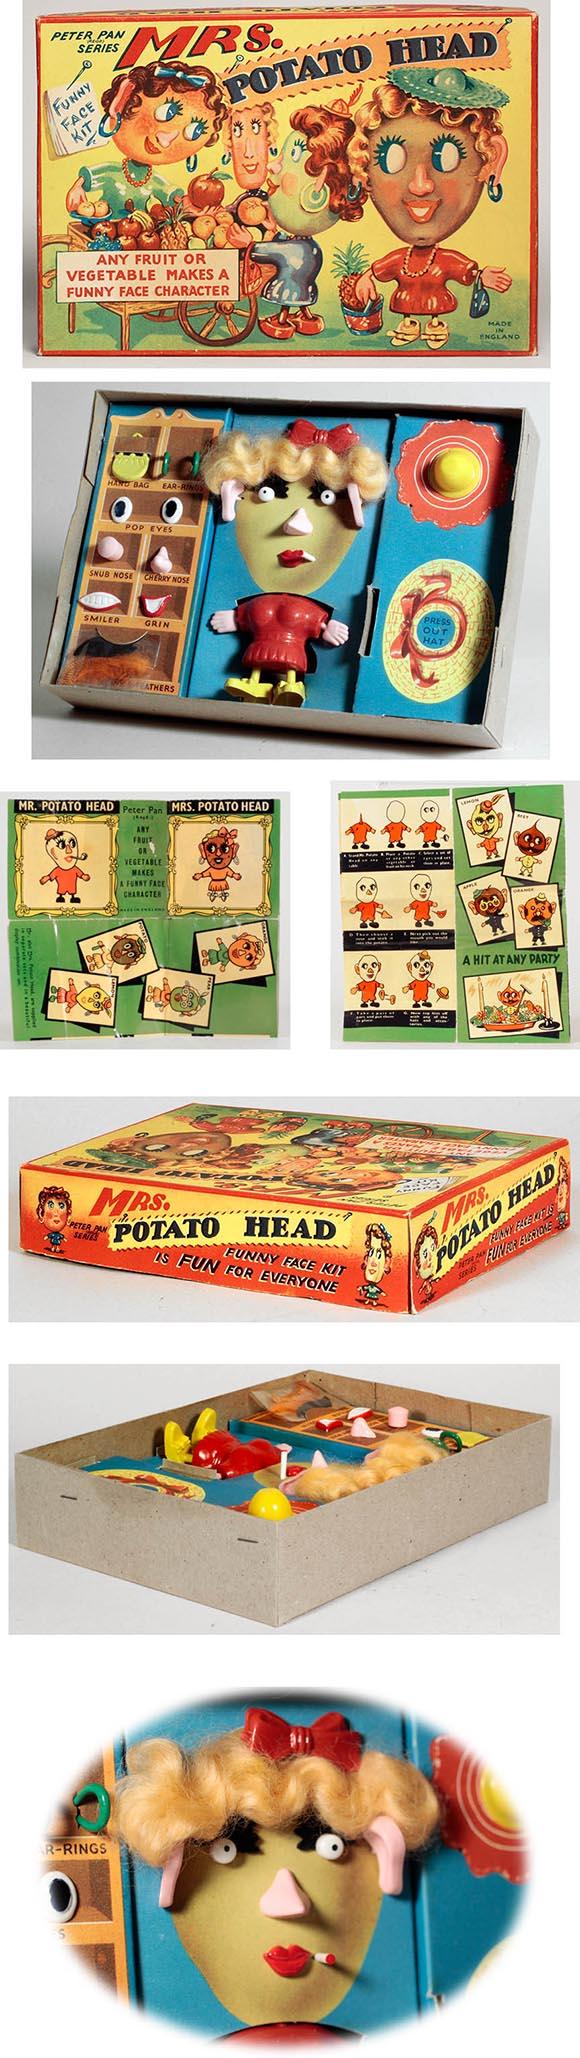 c.1954 England, Mrs. Potato Head in Original Box